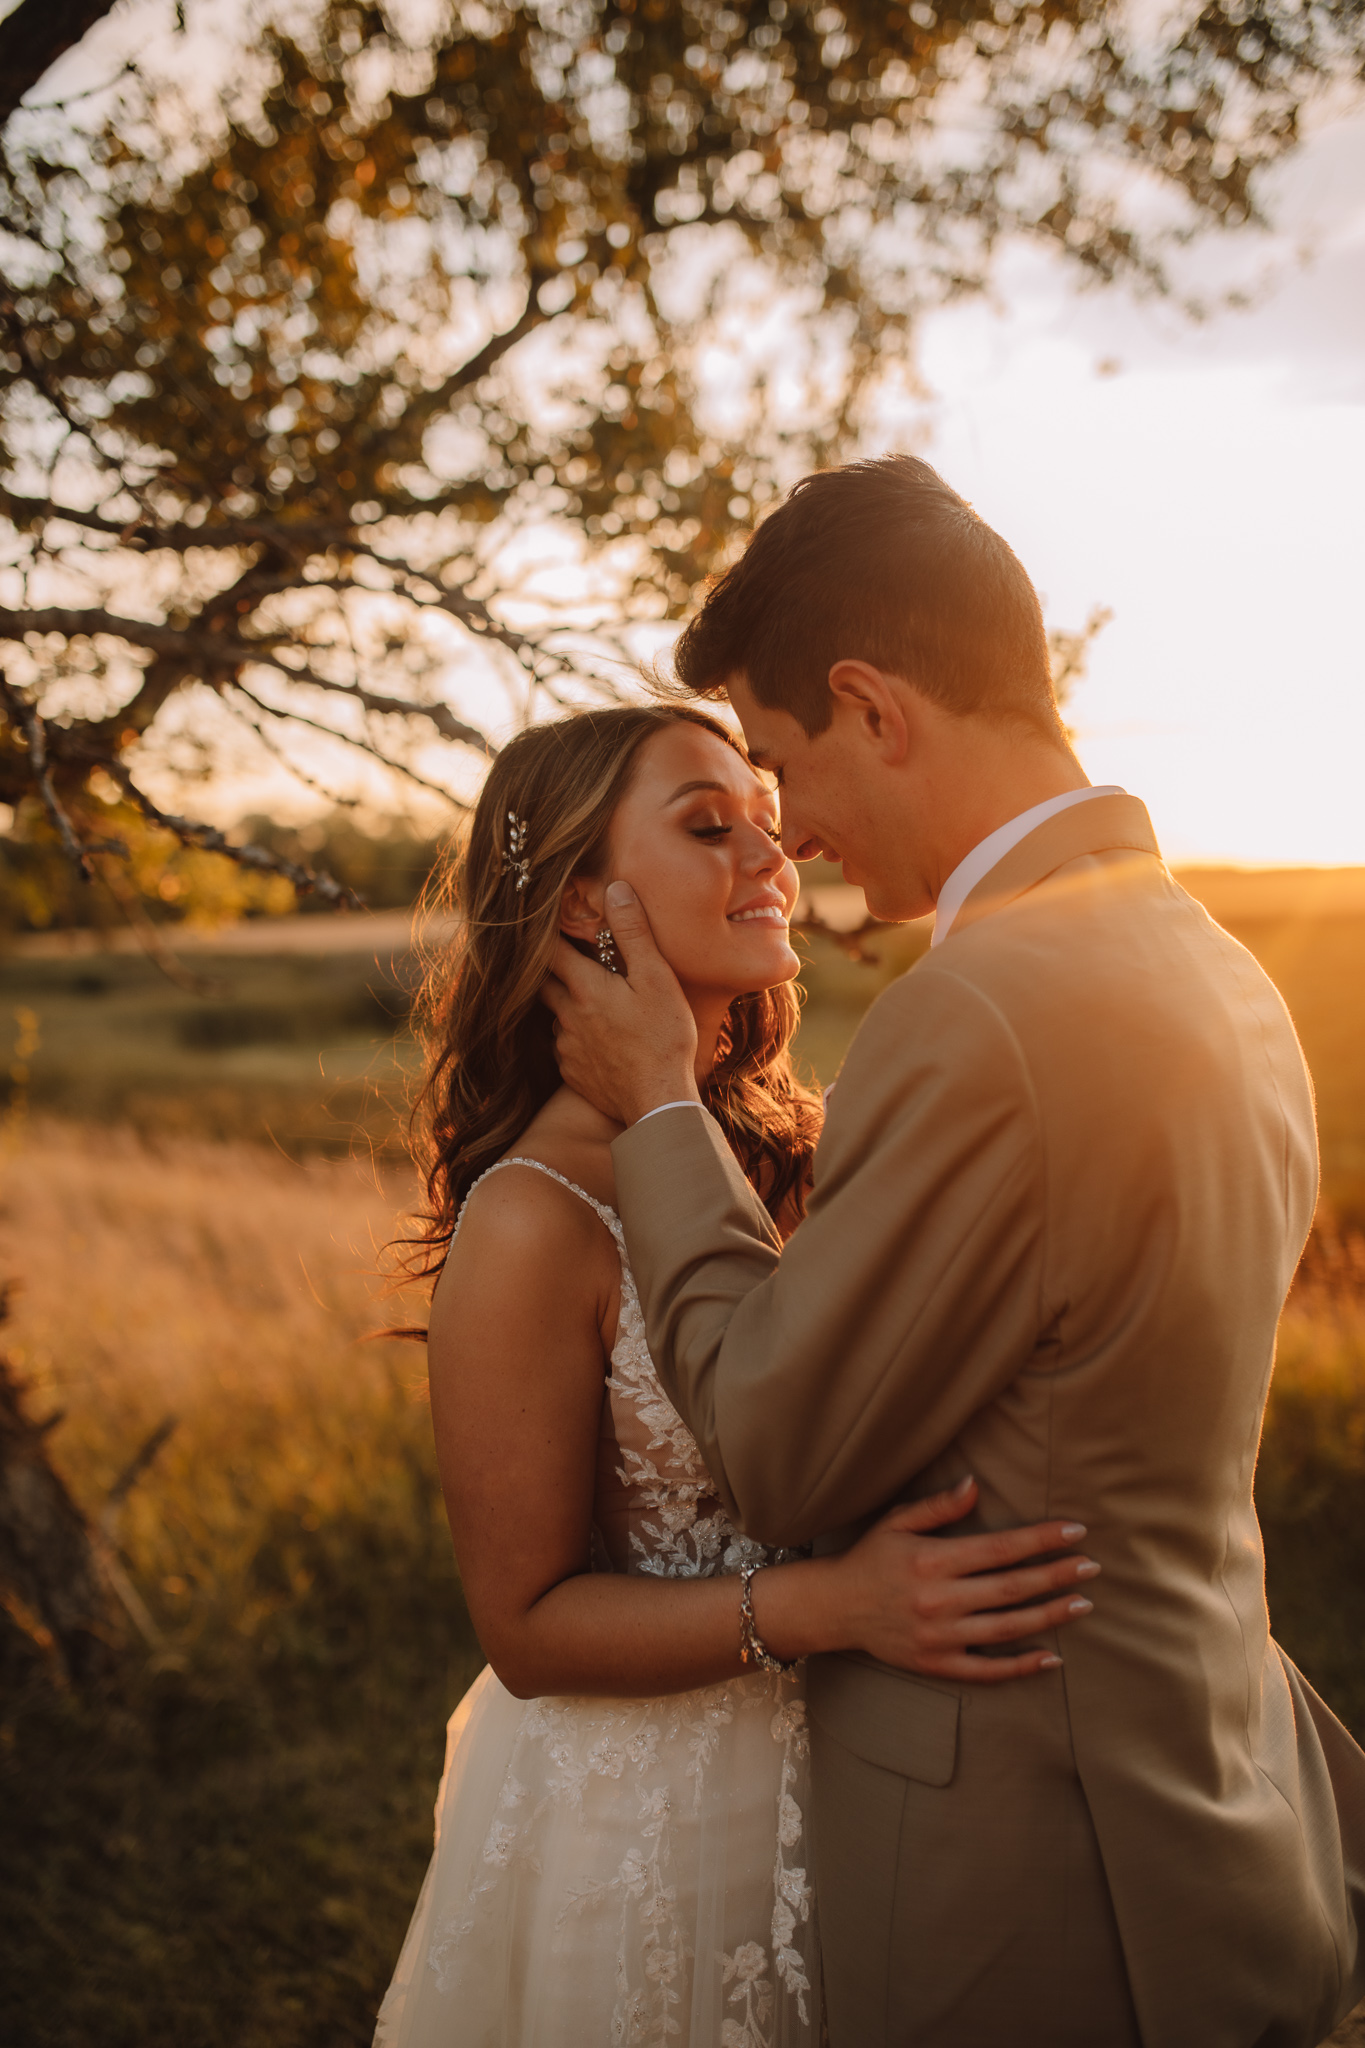 Sunset portraits of bride and groom at Lone Oak Farm Wedding Venue in North Dakota